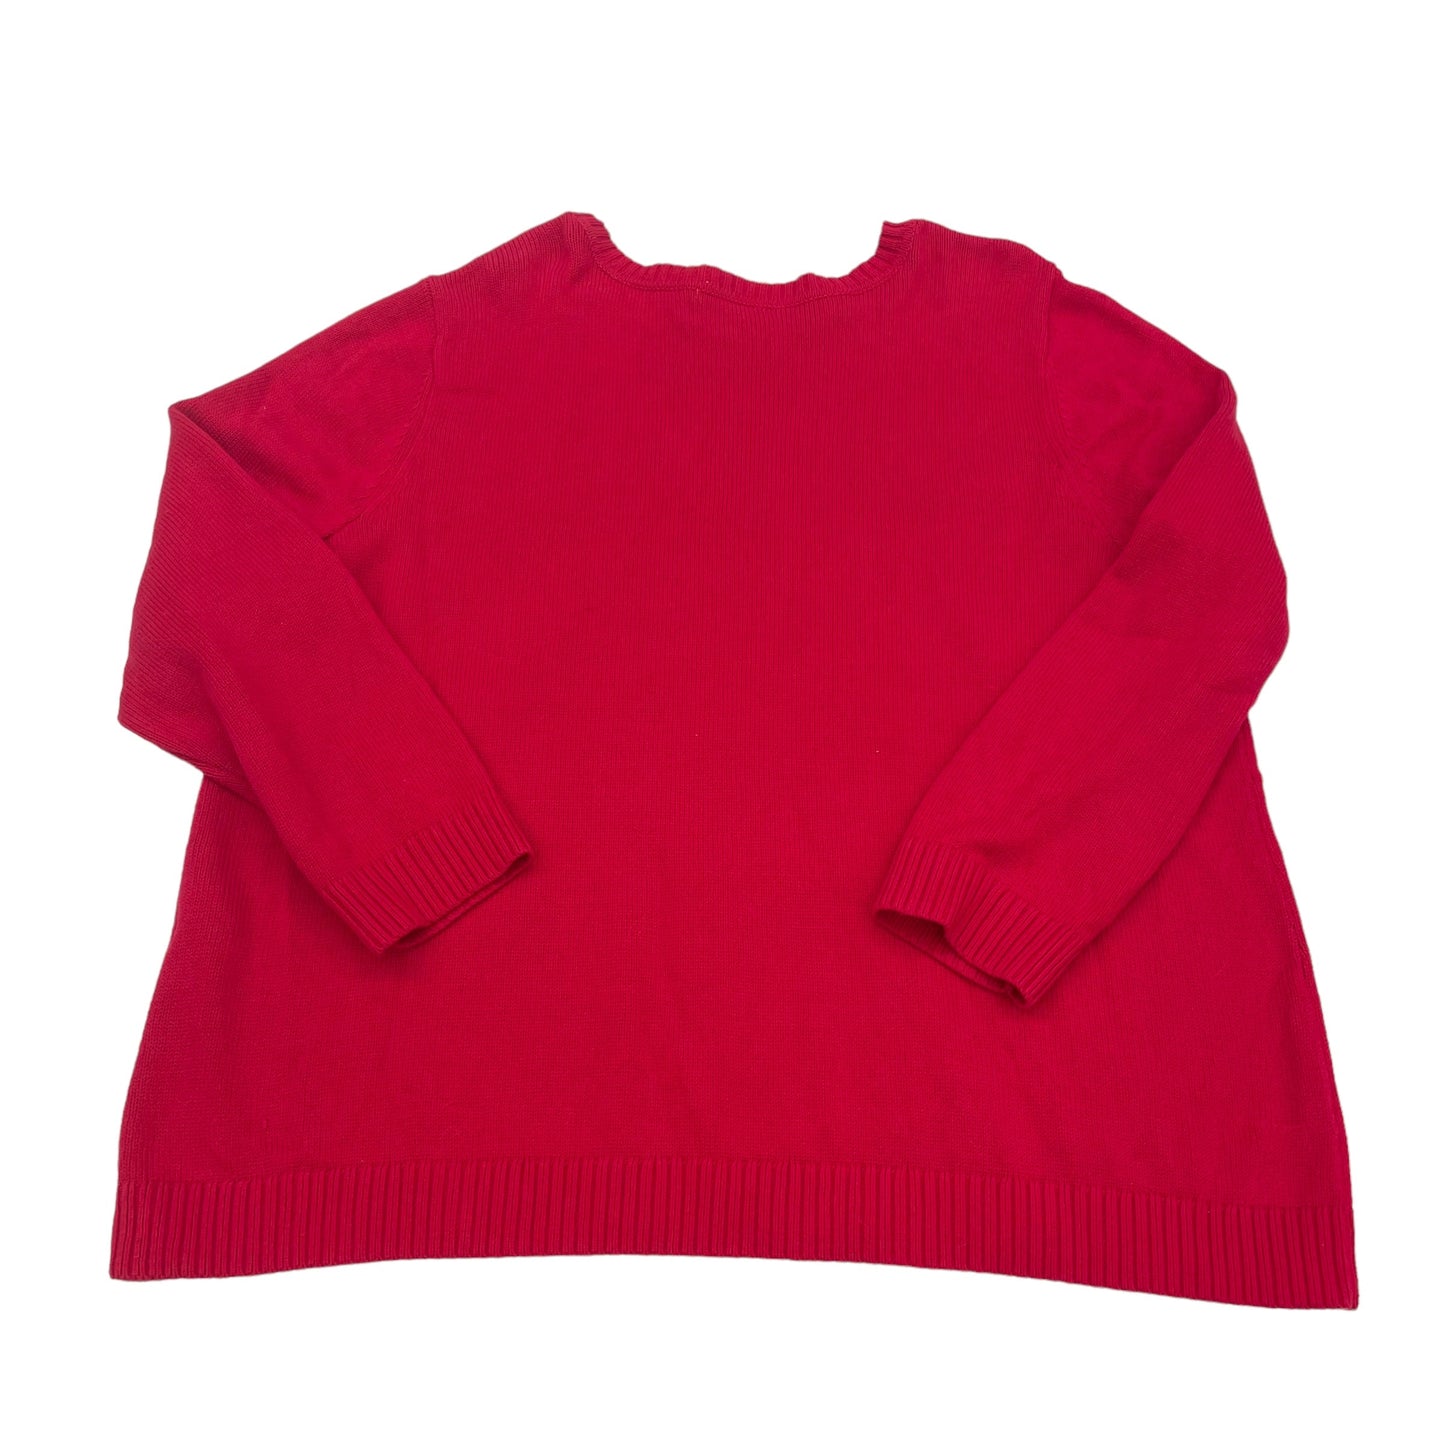 Sweater By Cj Banks  Size: 2x